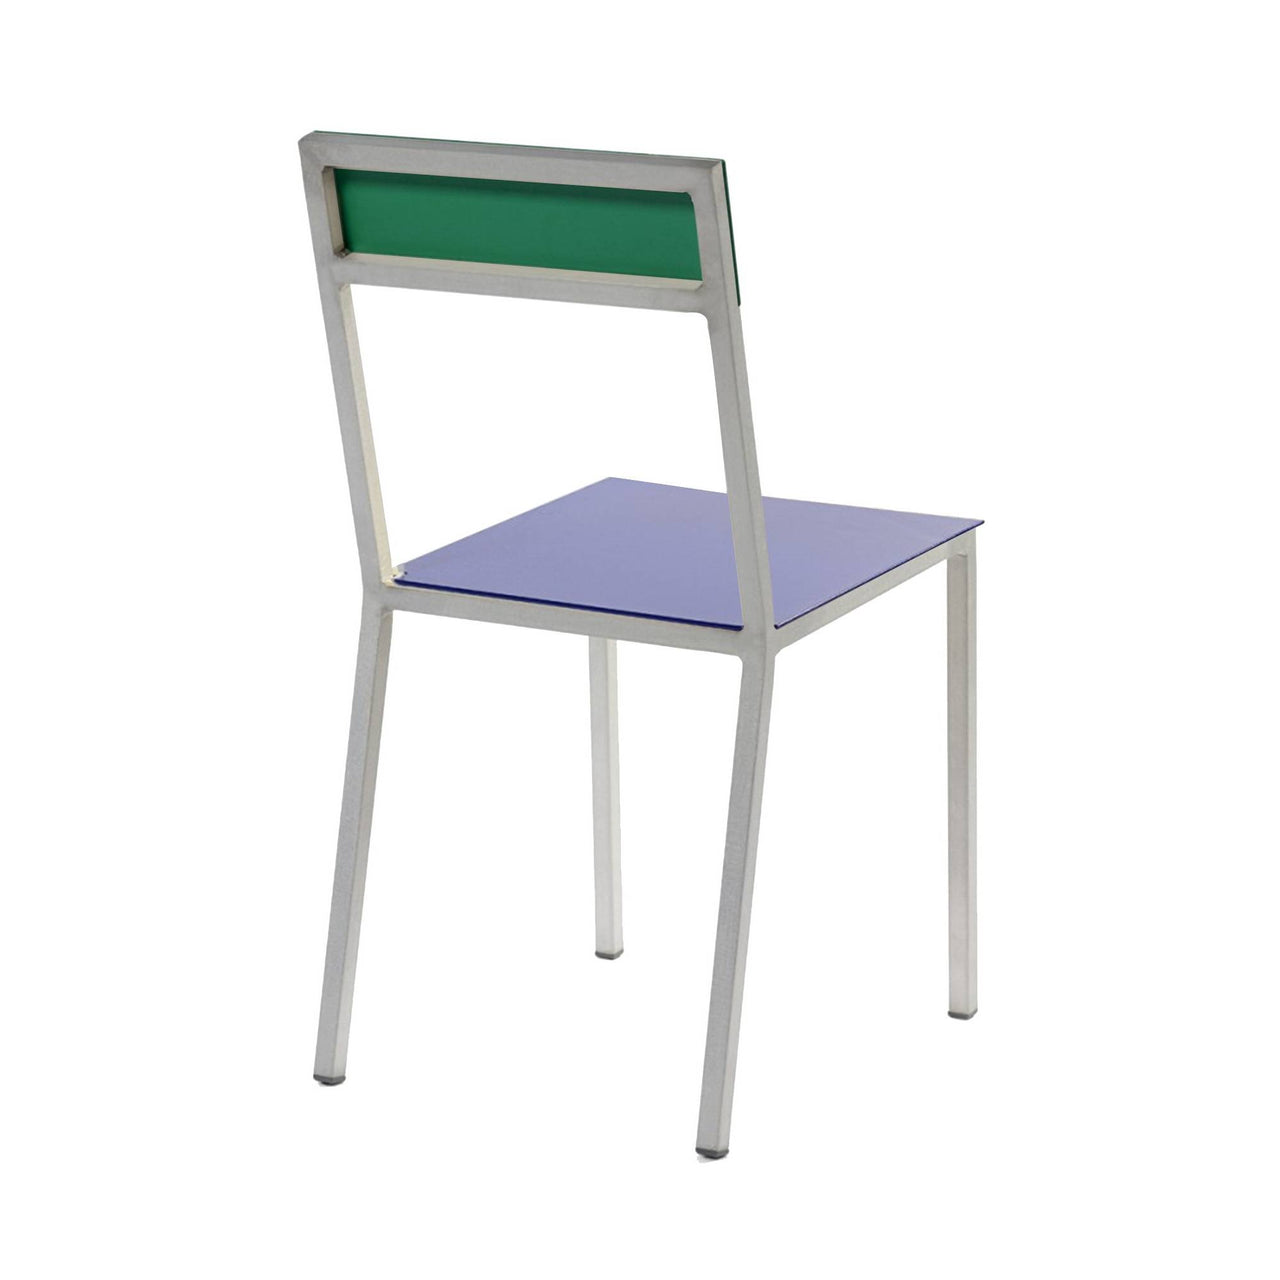 Alu Chair: Dark Blue + Green + Aluminum